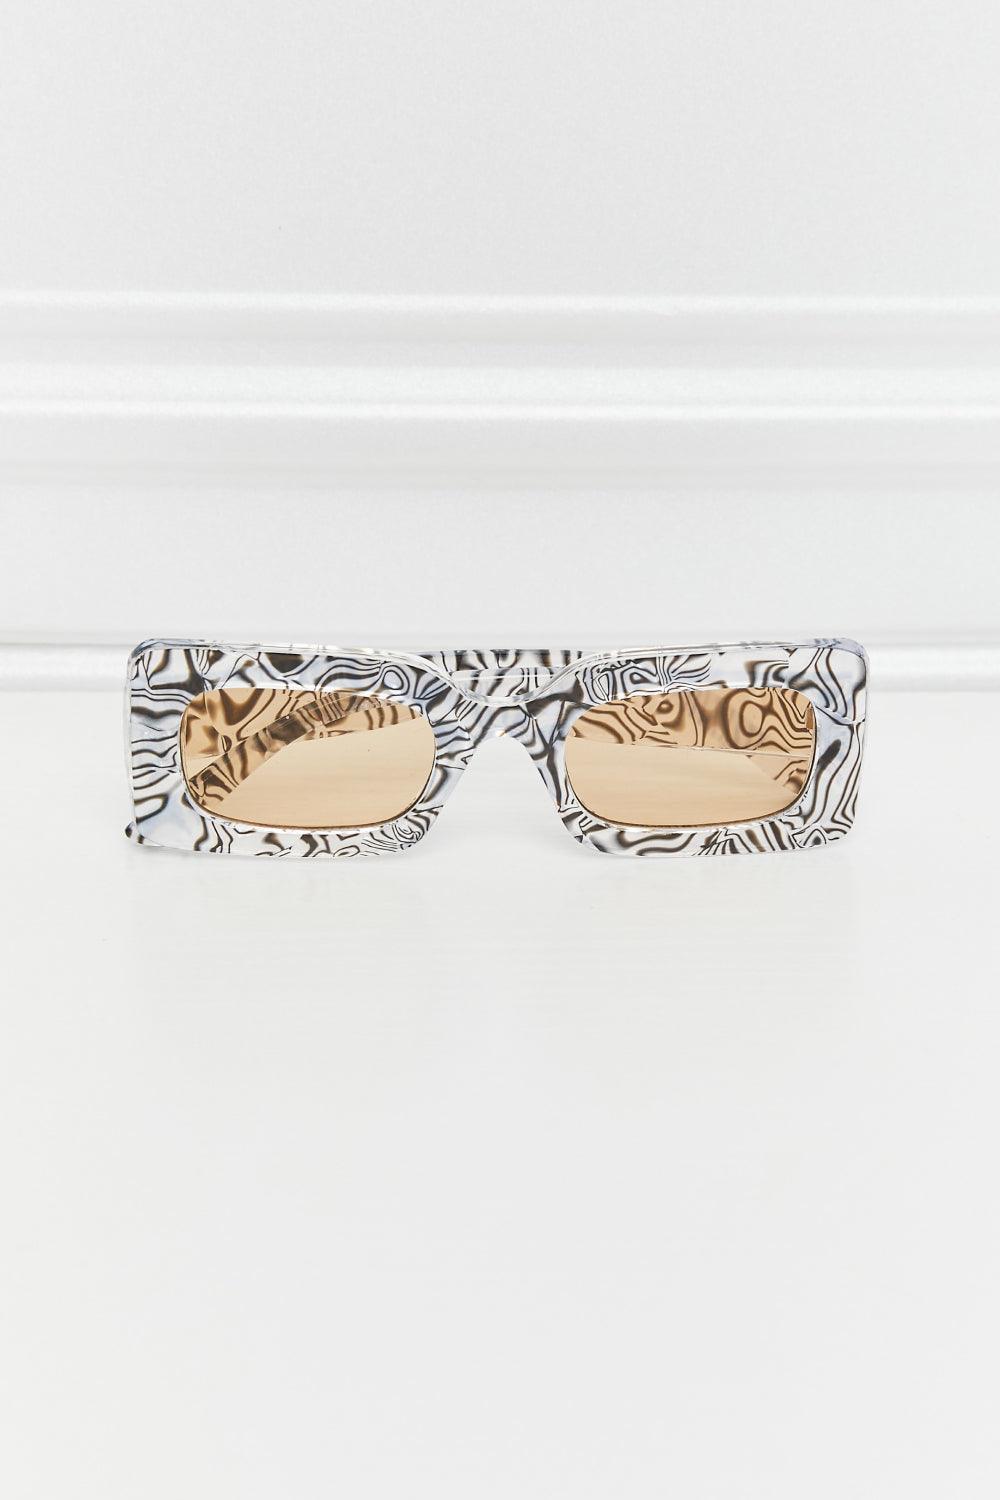 Tortoiseshell Rectangle Polycarbonate Sunglasses - Closet of Ren